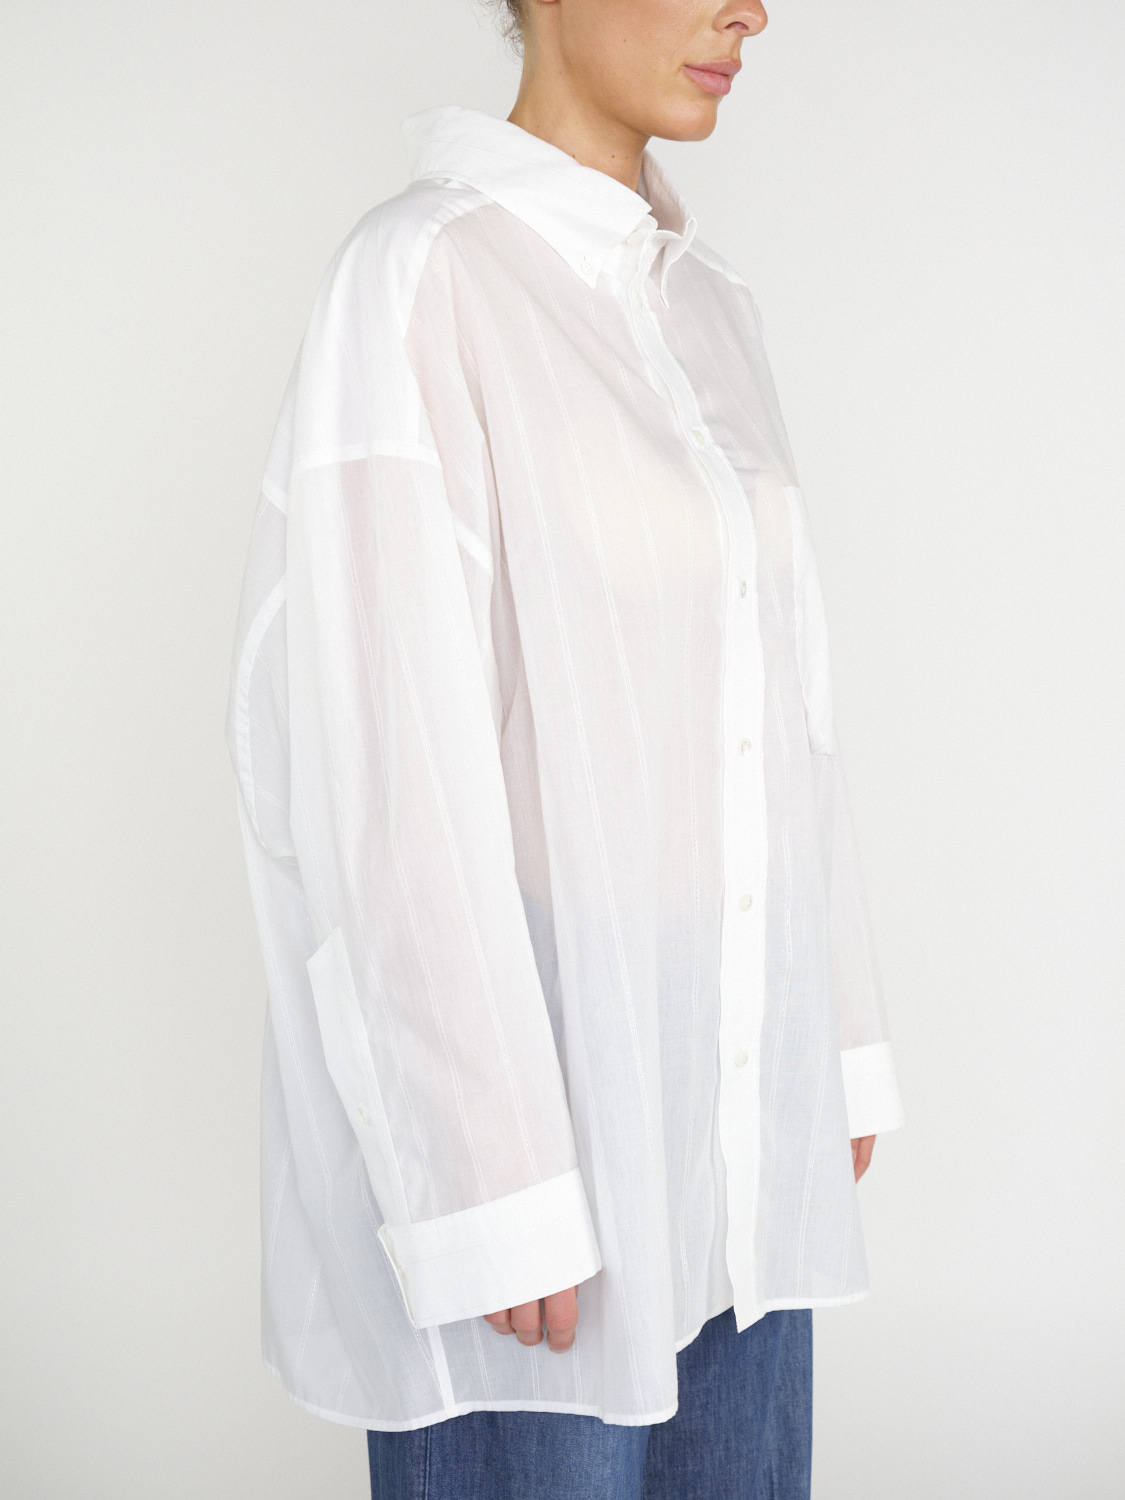 Darkpark Nathalie – Oversized Baumwoll-Hemd white S